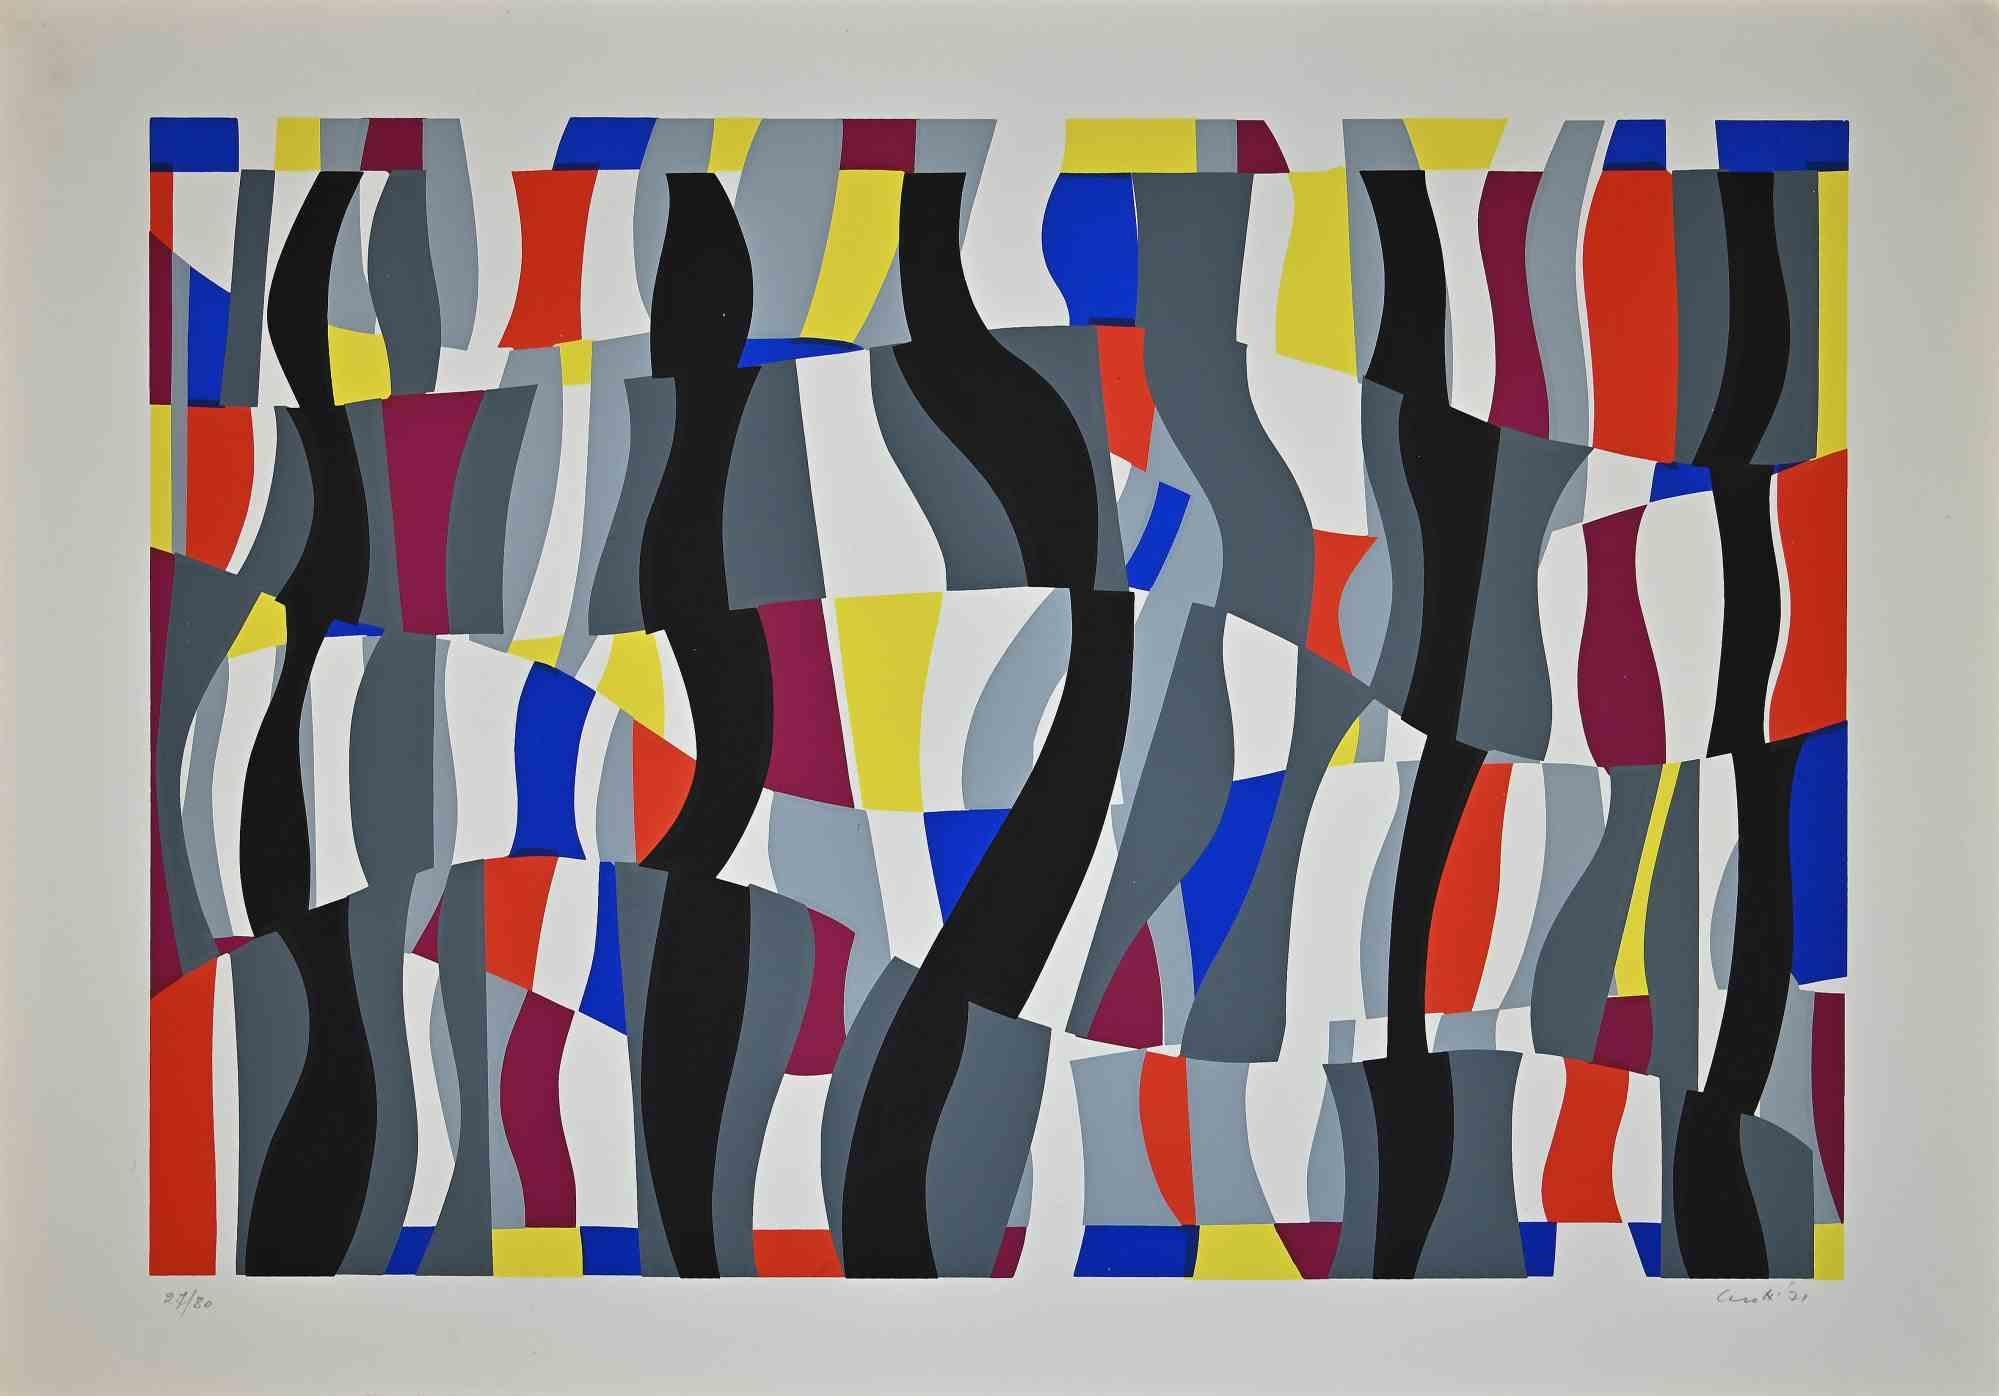 Colored Composition - Screen Print by Uberto Maria Casotti - 1971